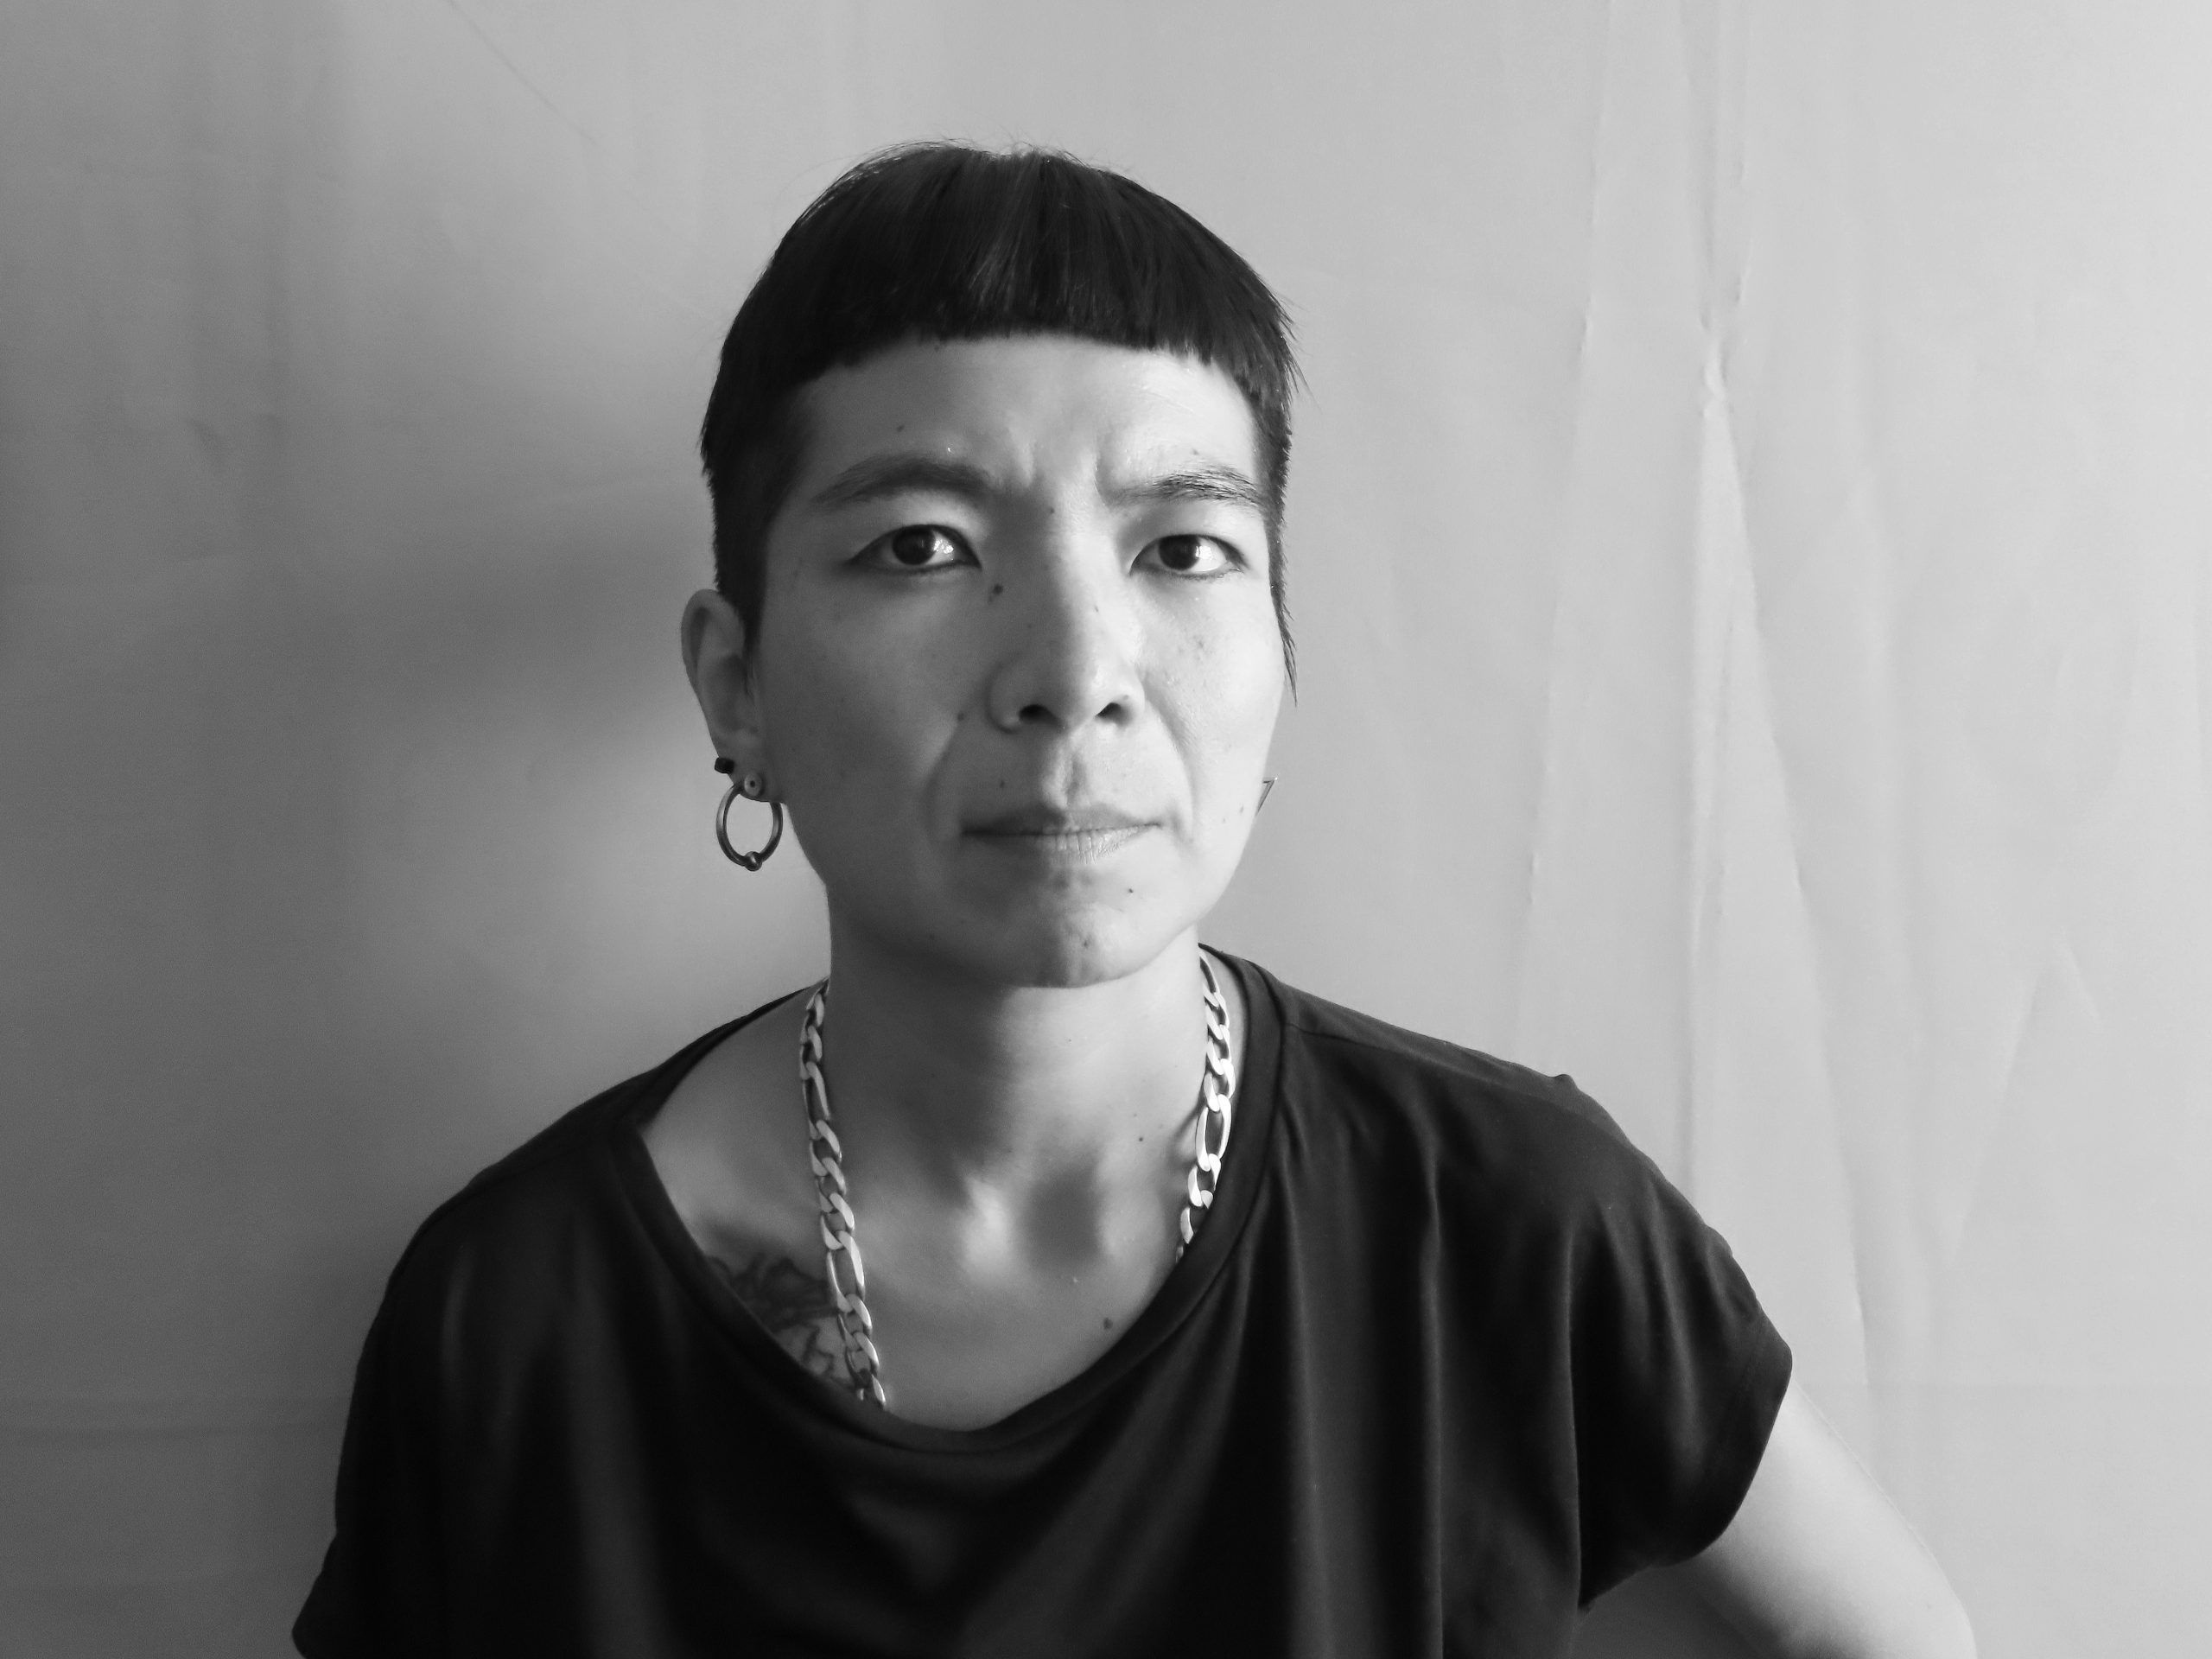 A black and white portrait image of Artes Mundi 10 selected artist, Naomi Rincón Gallardo